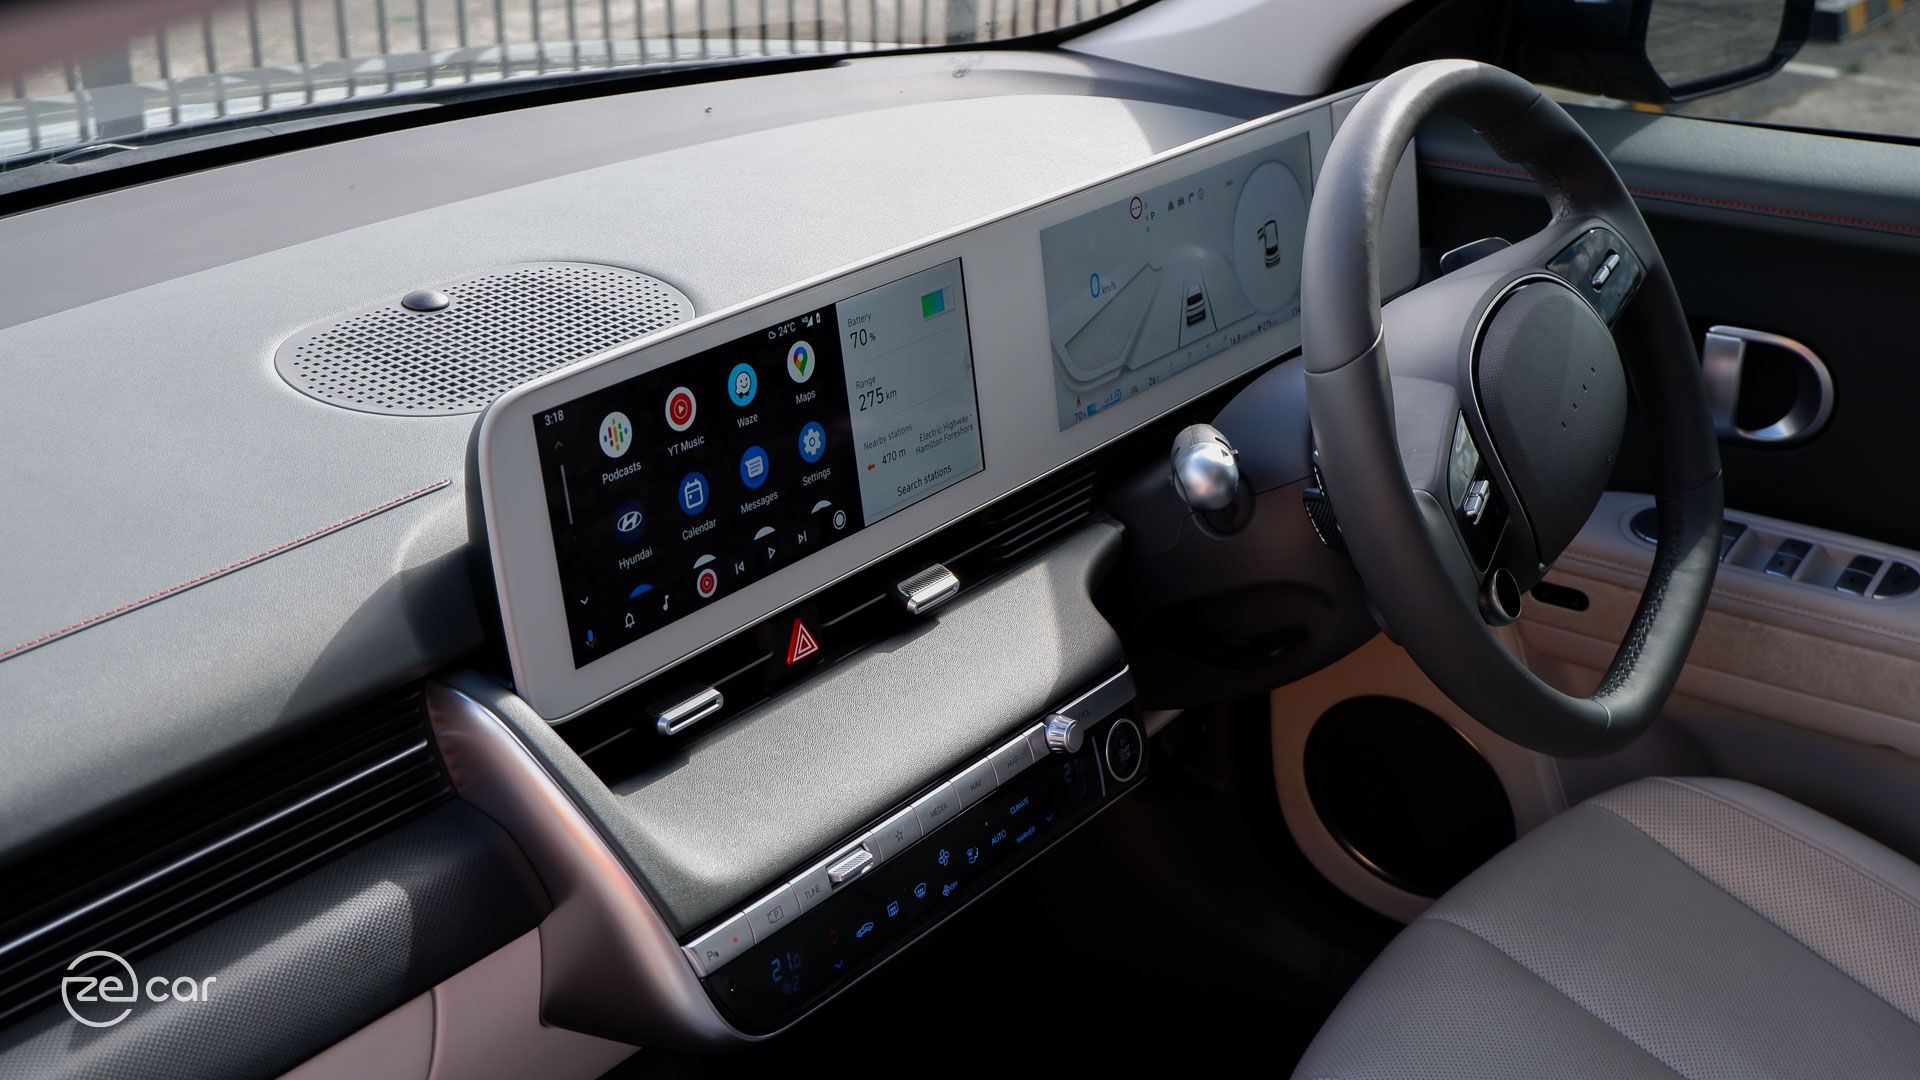 Hyundai Ioniq 5 white interior and touchscreen with Android Auto